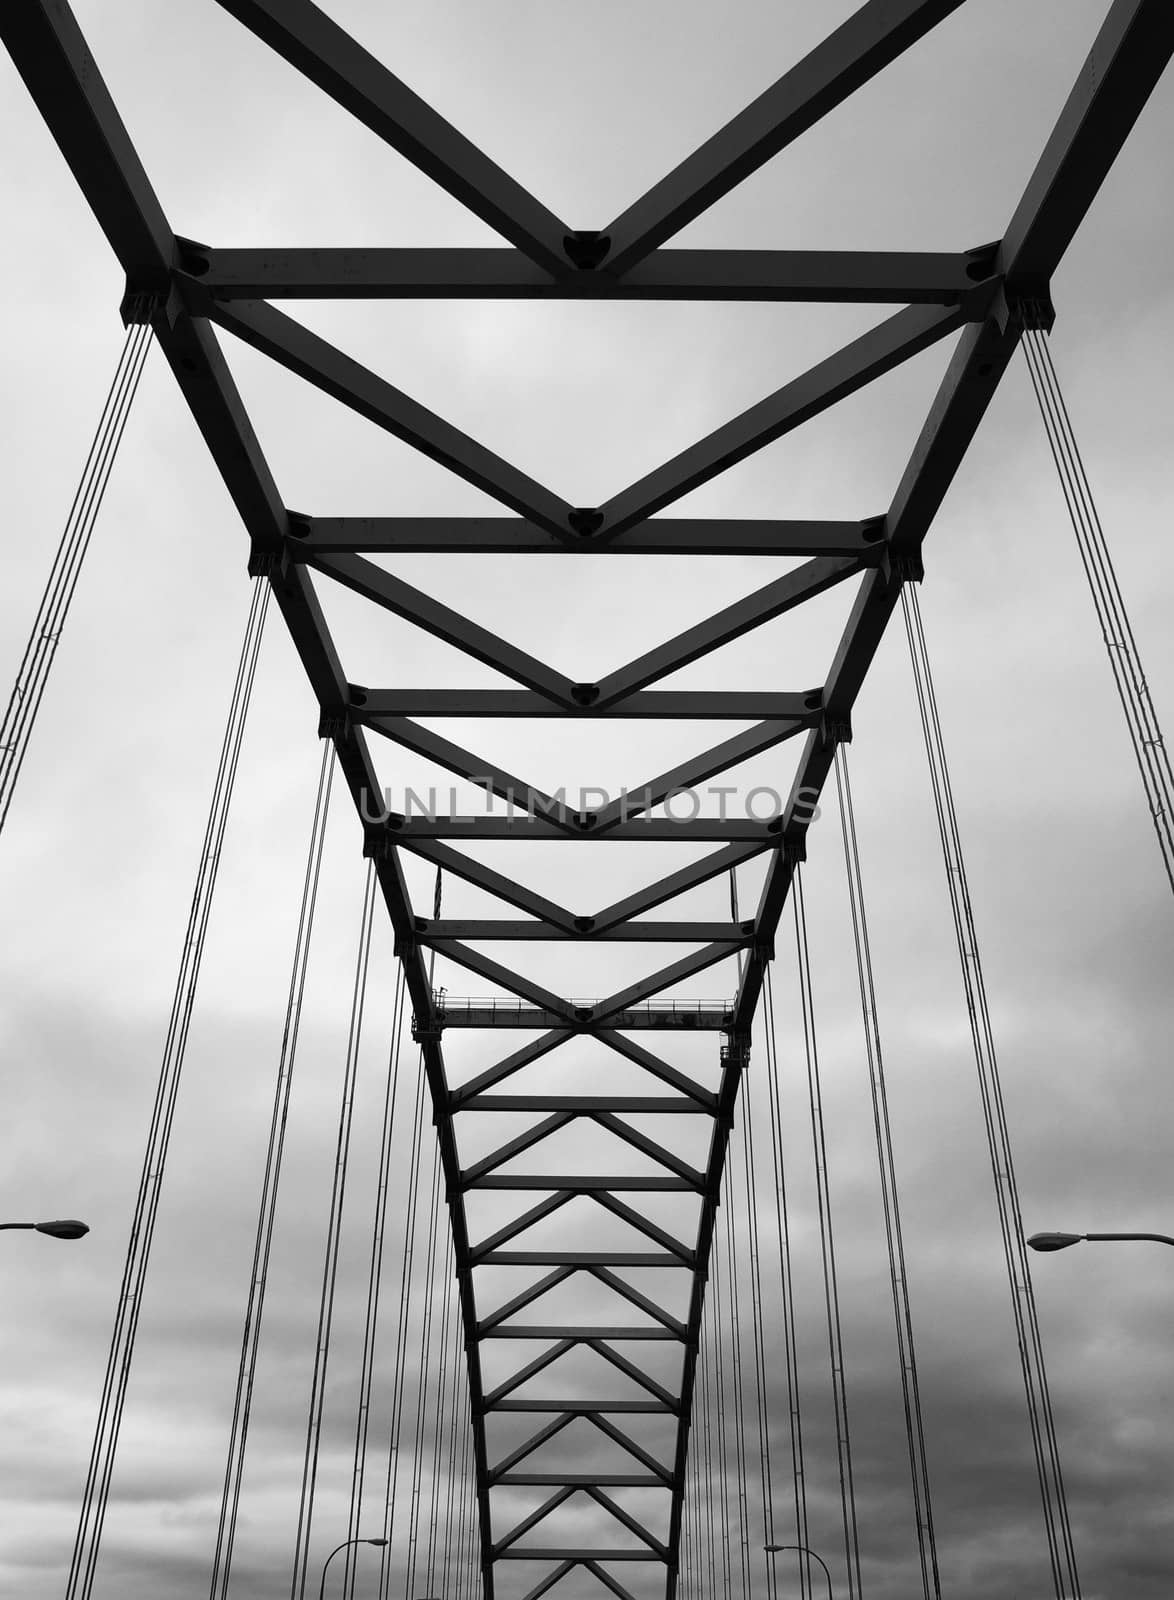 Portland's Fremont Bridge black and white image against a cloudy sky